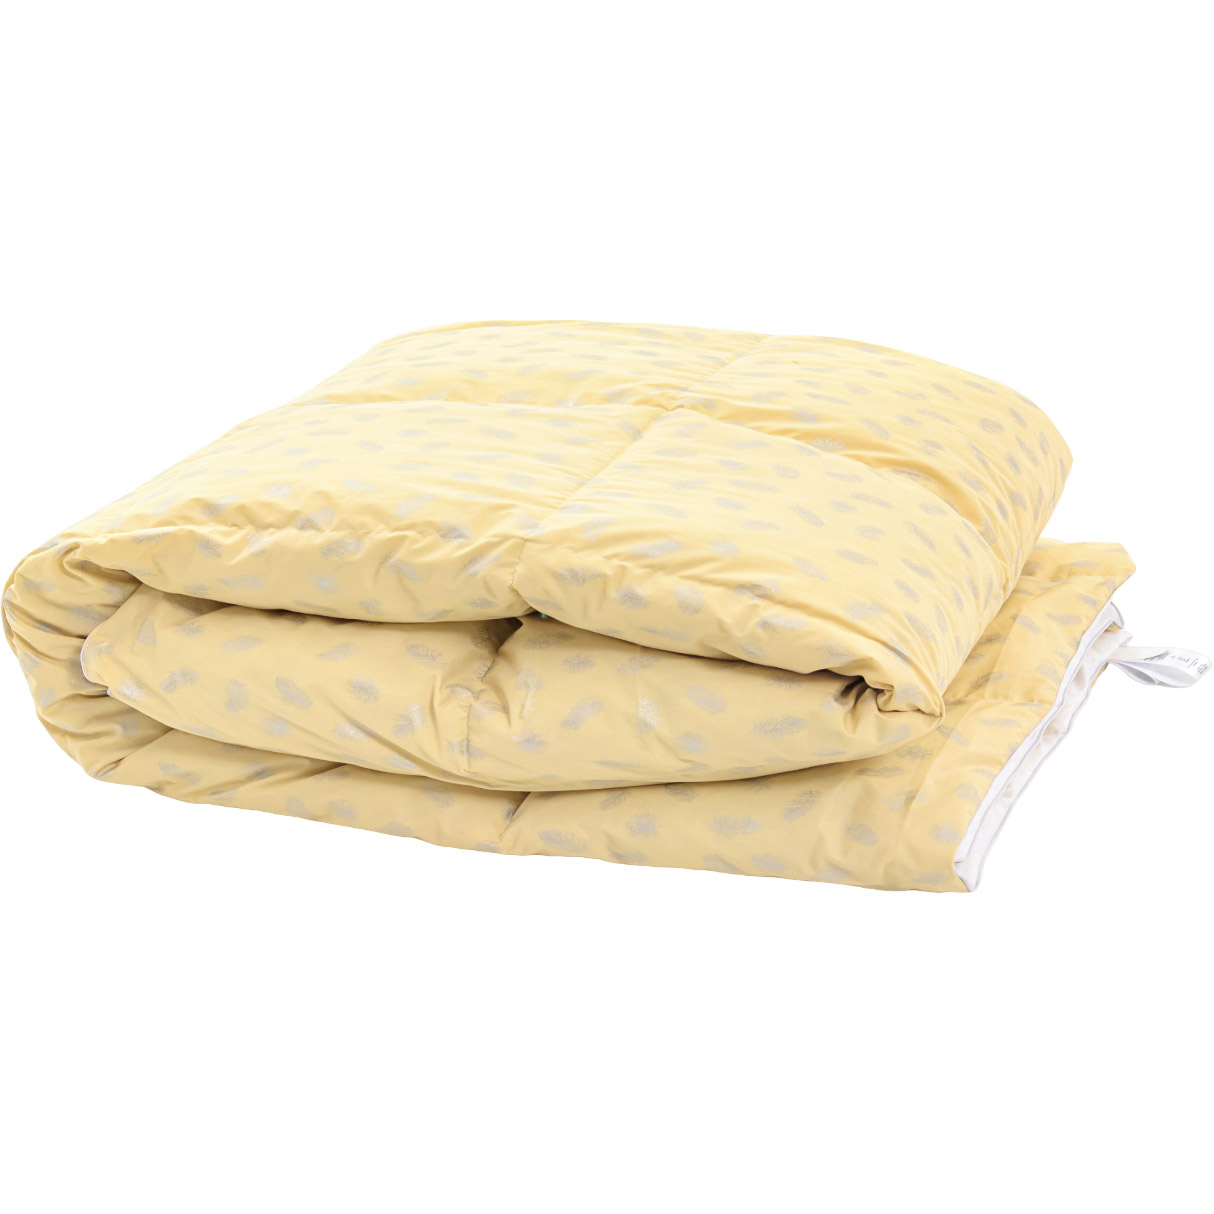 Одеяло пуховое MirSon Karmen №1857 Bio-Beige, 70% пух, 110x140 см, бежевое (2200003013931) - фото 1